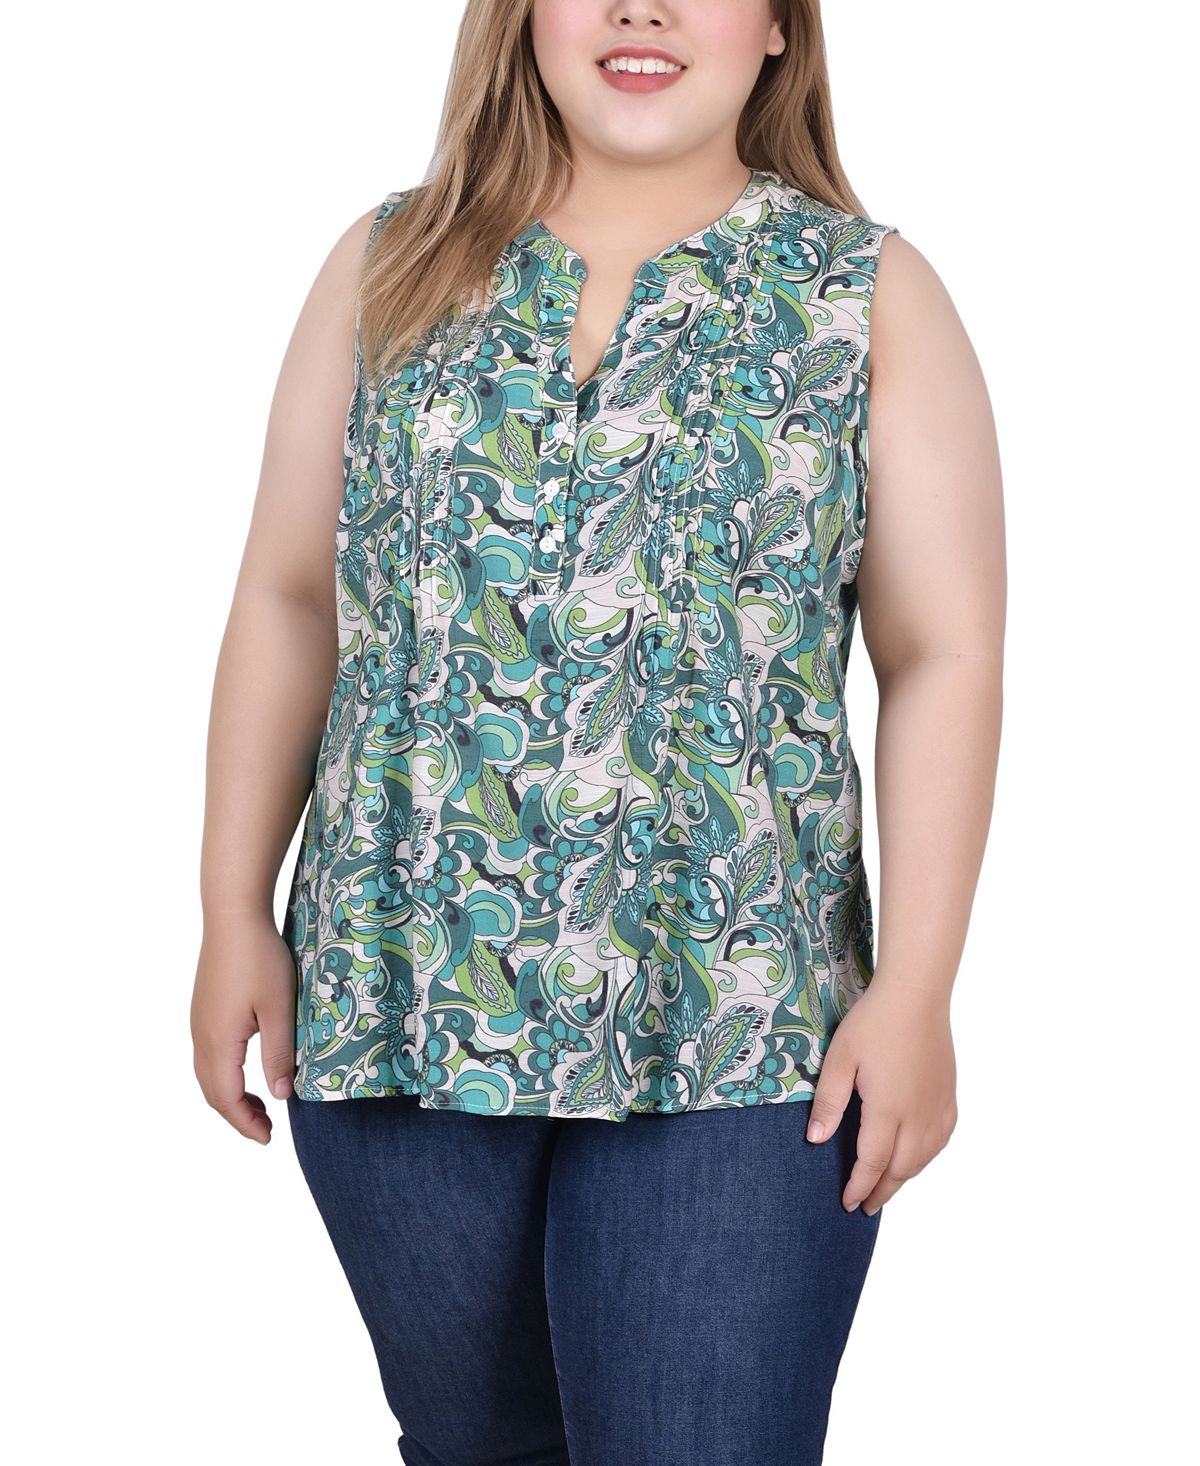 Блузка без рукавов с защипами больших размеров NY Collection блузка без рукавов больших размеров с подвернутой булавкой nydj цвет ramona dots